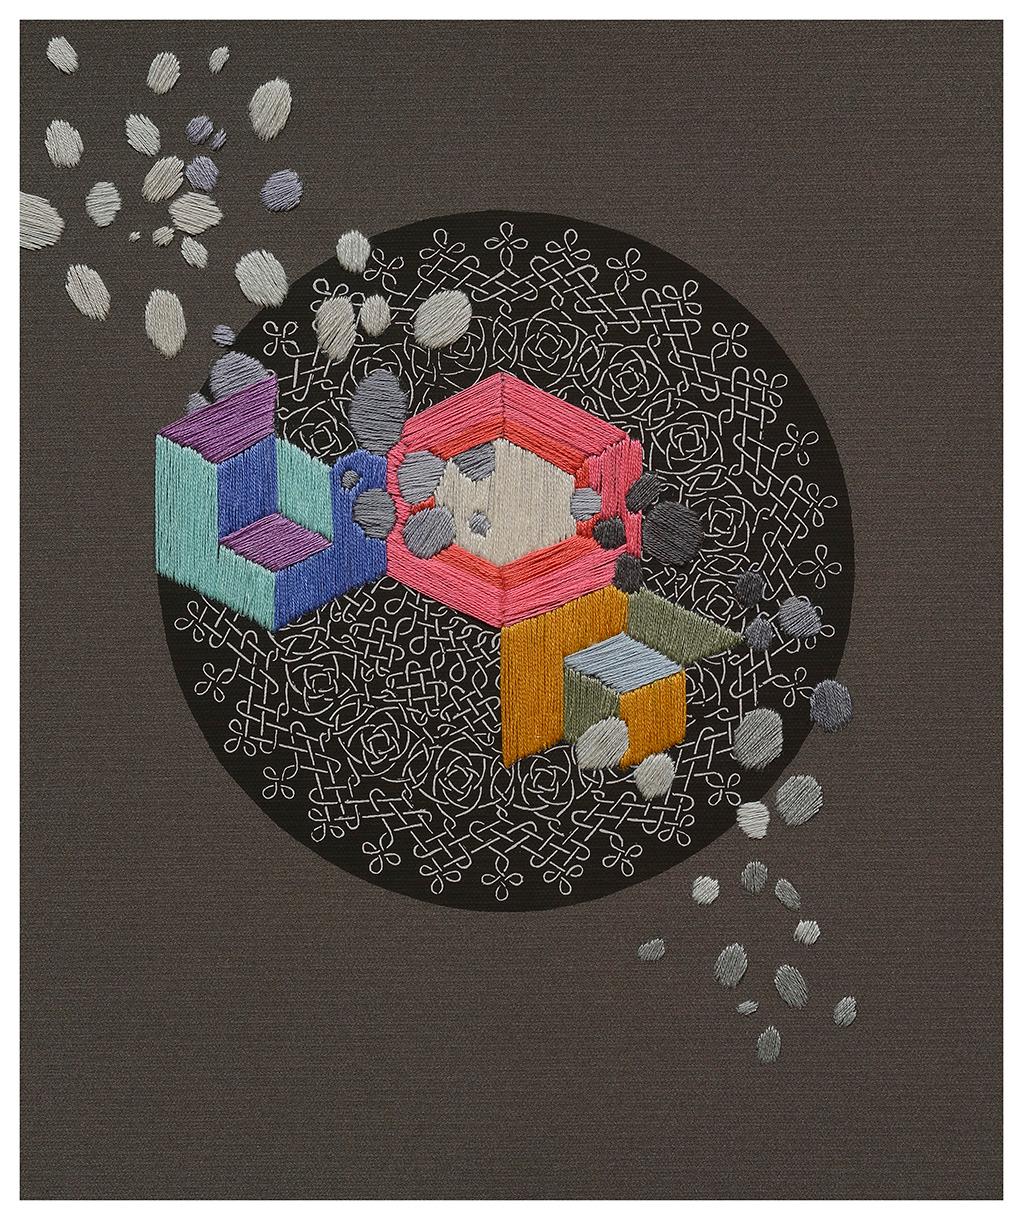 Deconstrucción. Unique embroidery artwork from the Durero series  - Art by Ana Seggiaro